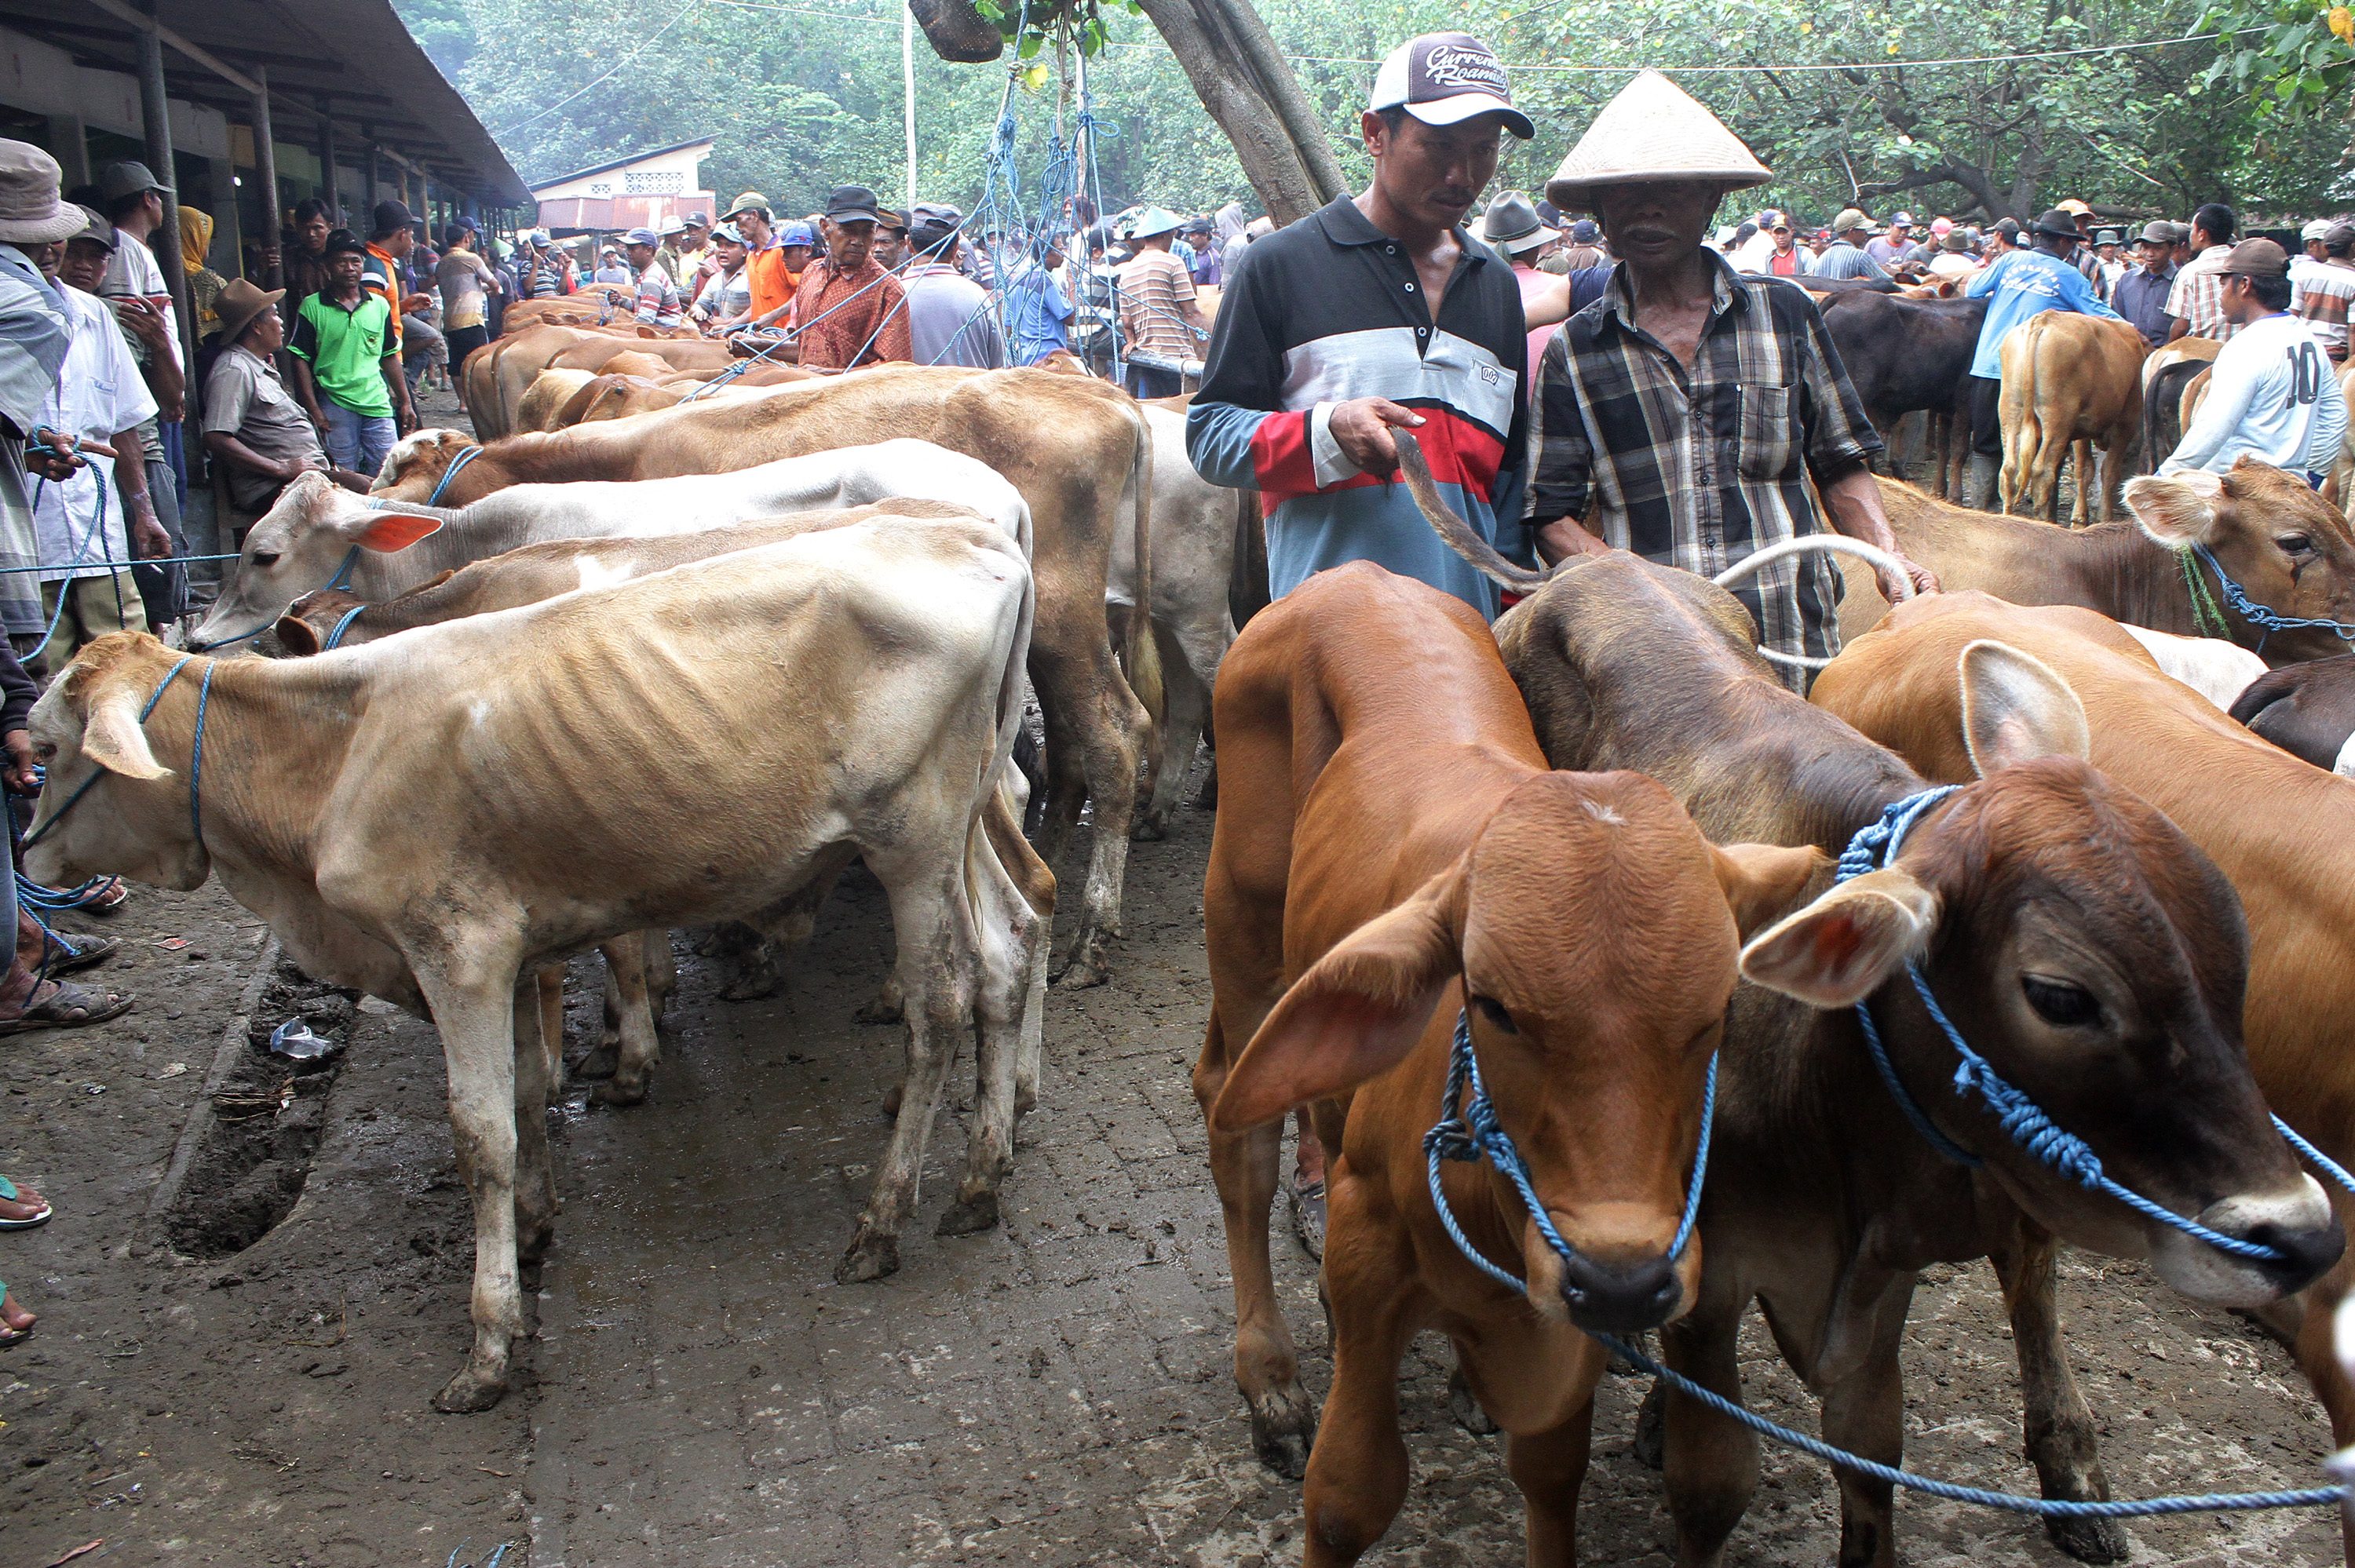 Peternak sapi di Pasar Hewan Legi, Ngawi, Jawa Timur mengeluhkan kurangnya persediaan sapi siap potong di pasaran pasca Hari Raya Iduladha sehingga mereka harus mendatangkan sapi dari luar daerah untuk memenuhi permintaan. Foto oleh Ari Bowo Sucipto/Antara 